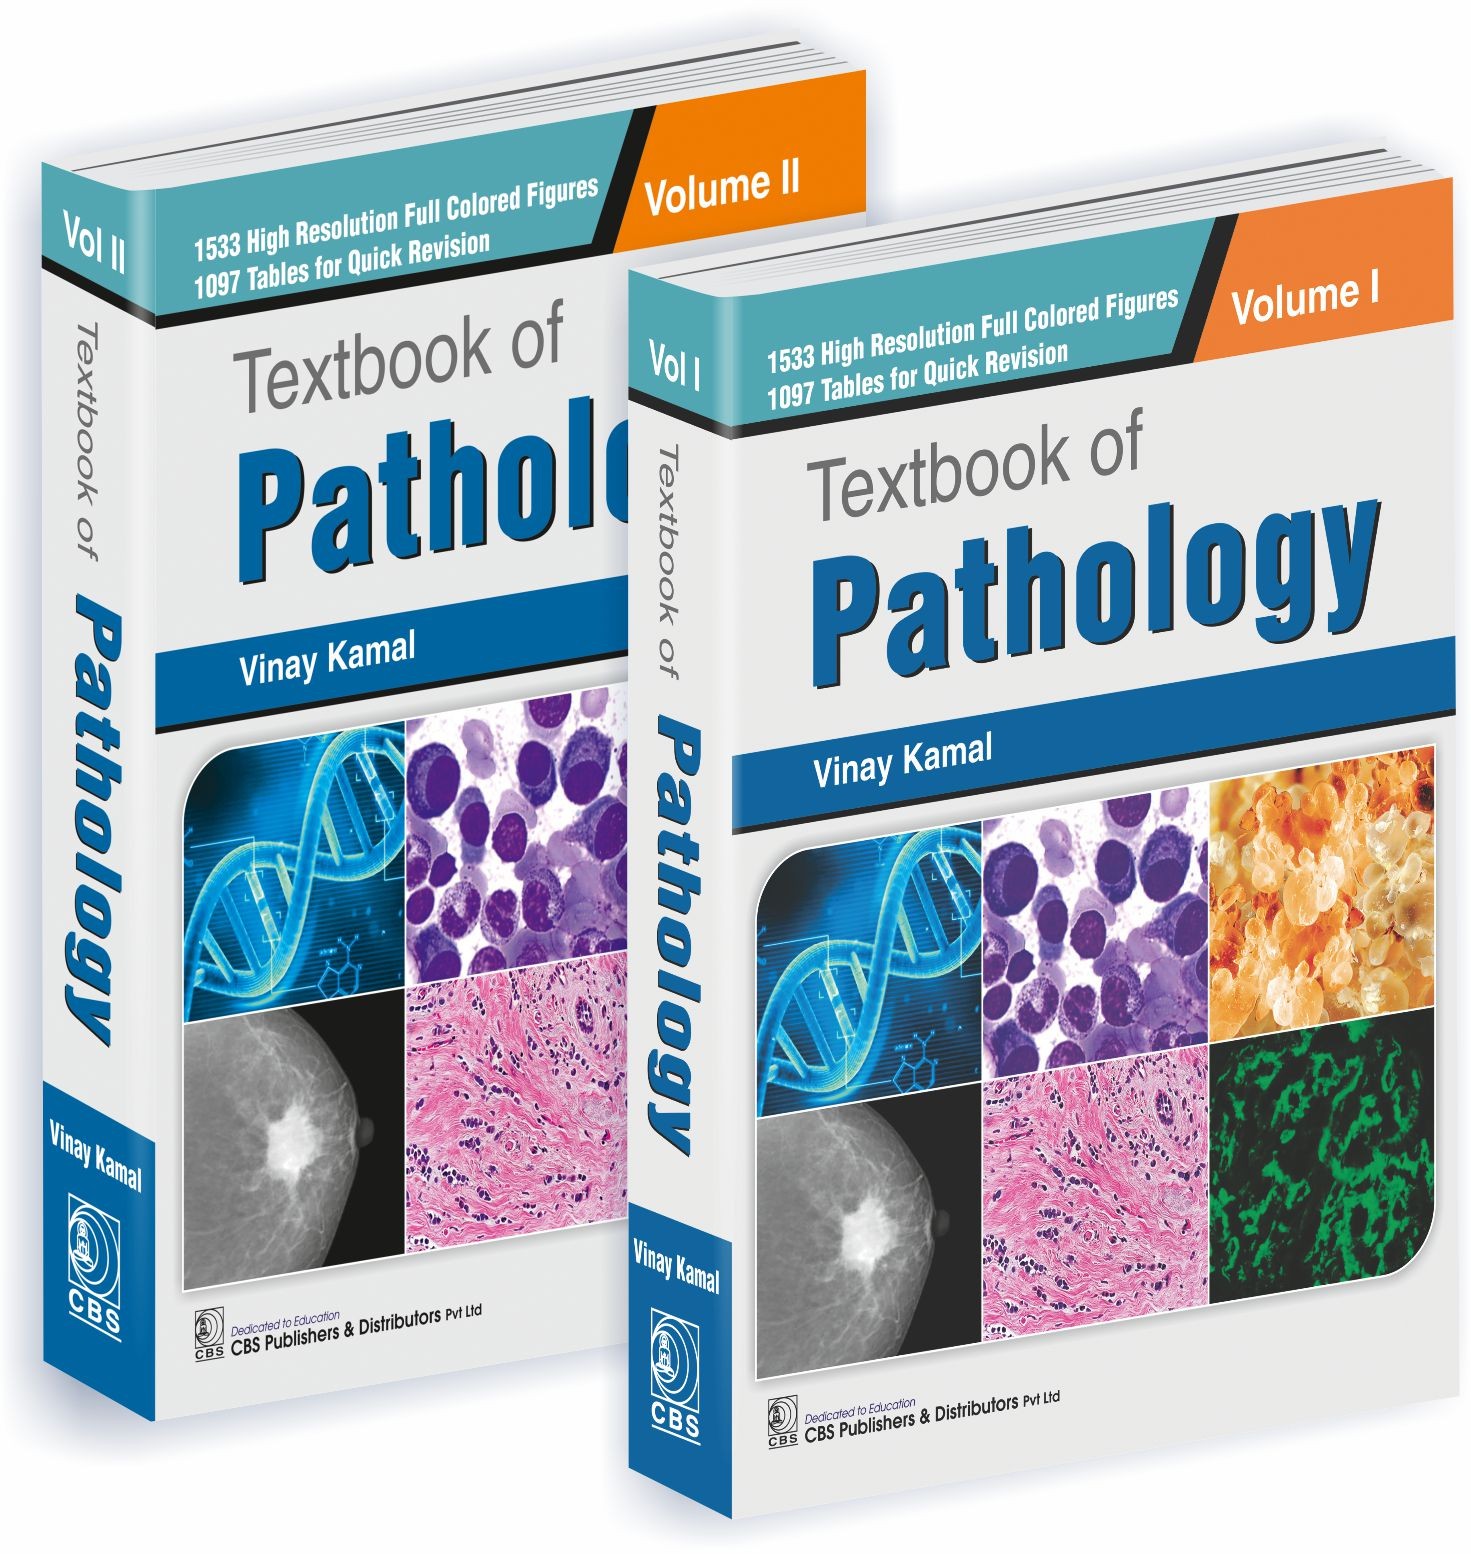 Textbook of Pathology, Volume 1 & Volume 2